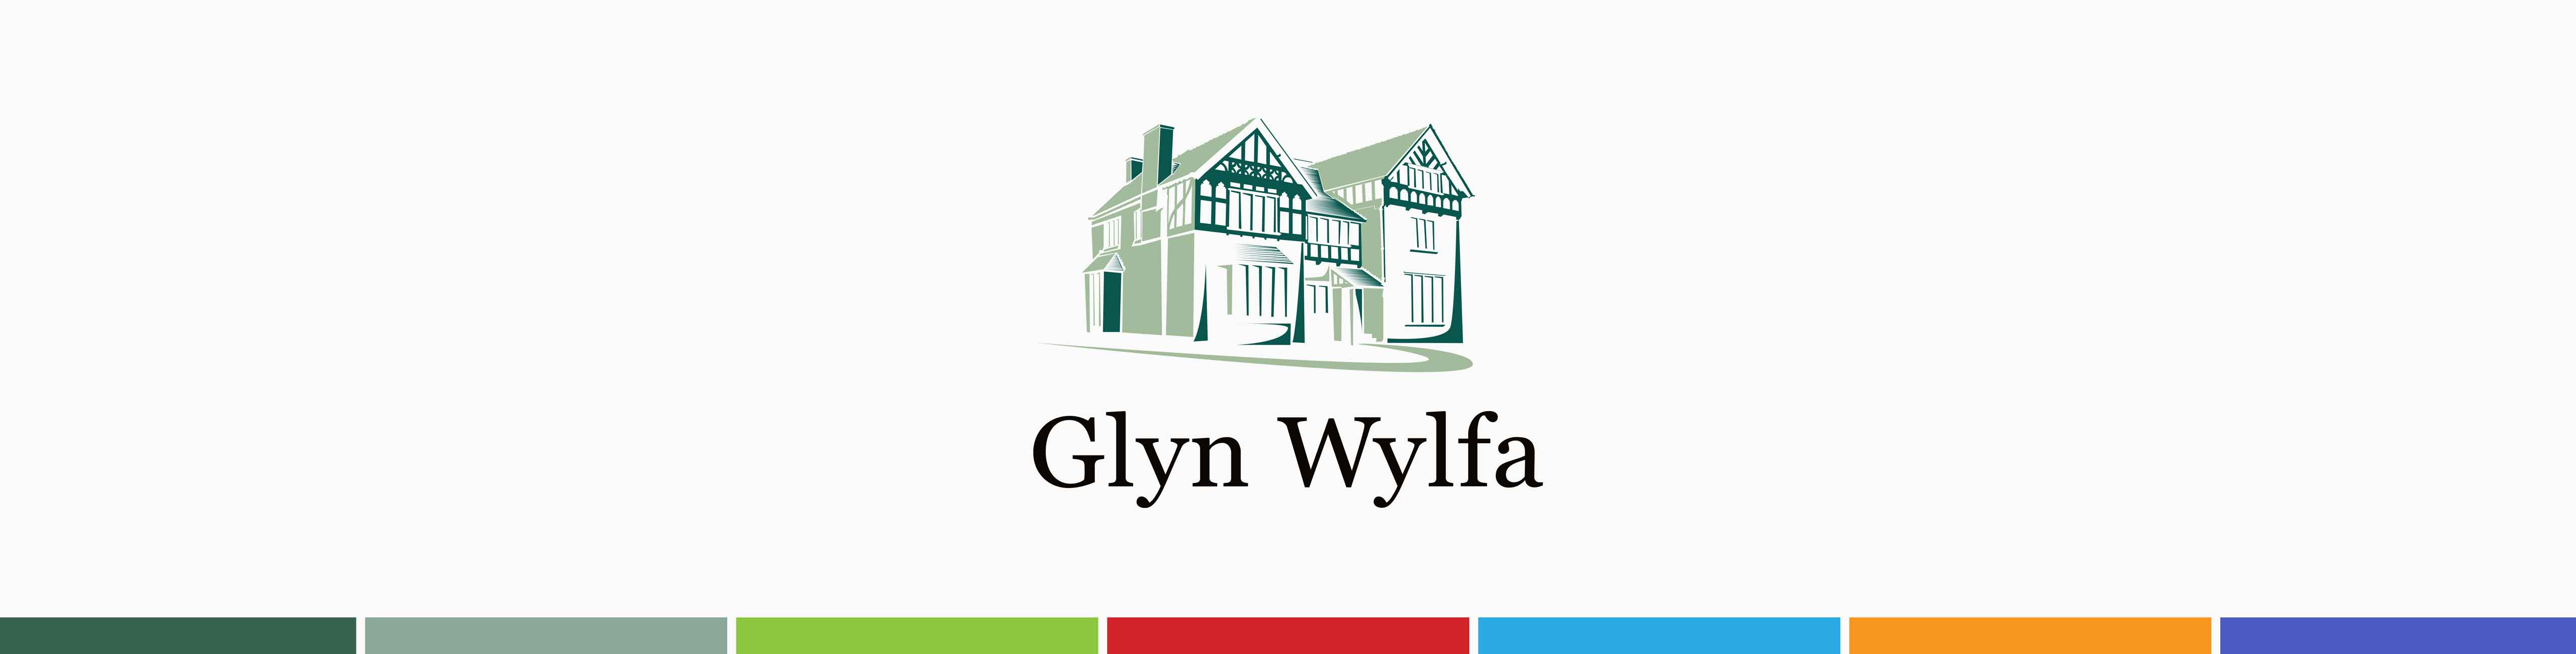 Glyn Wylfa Branding